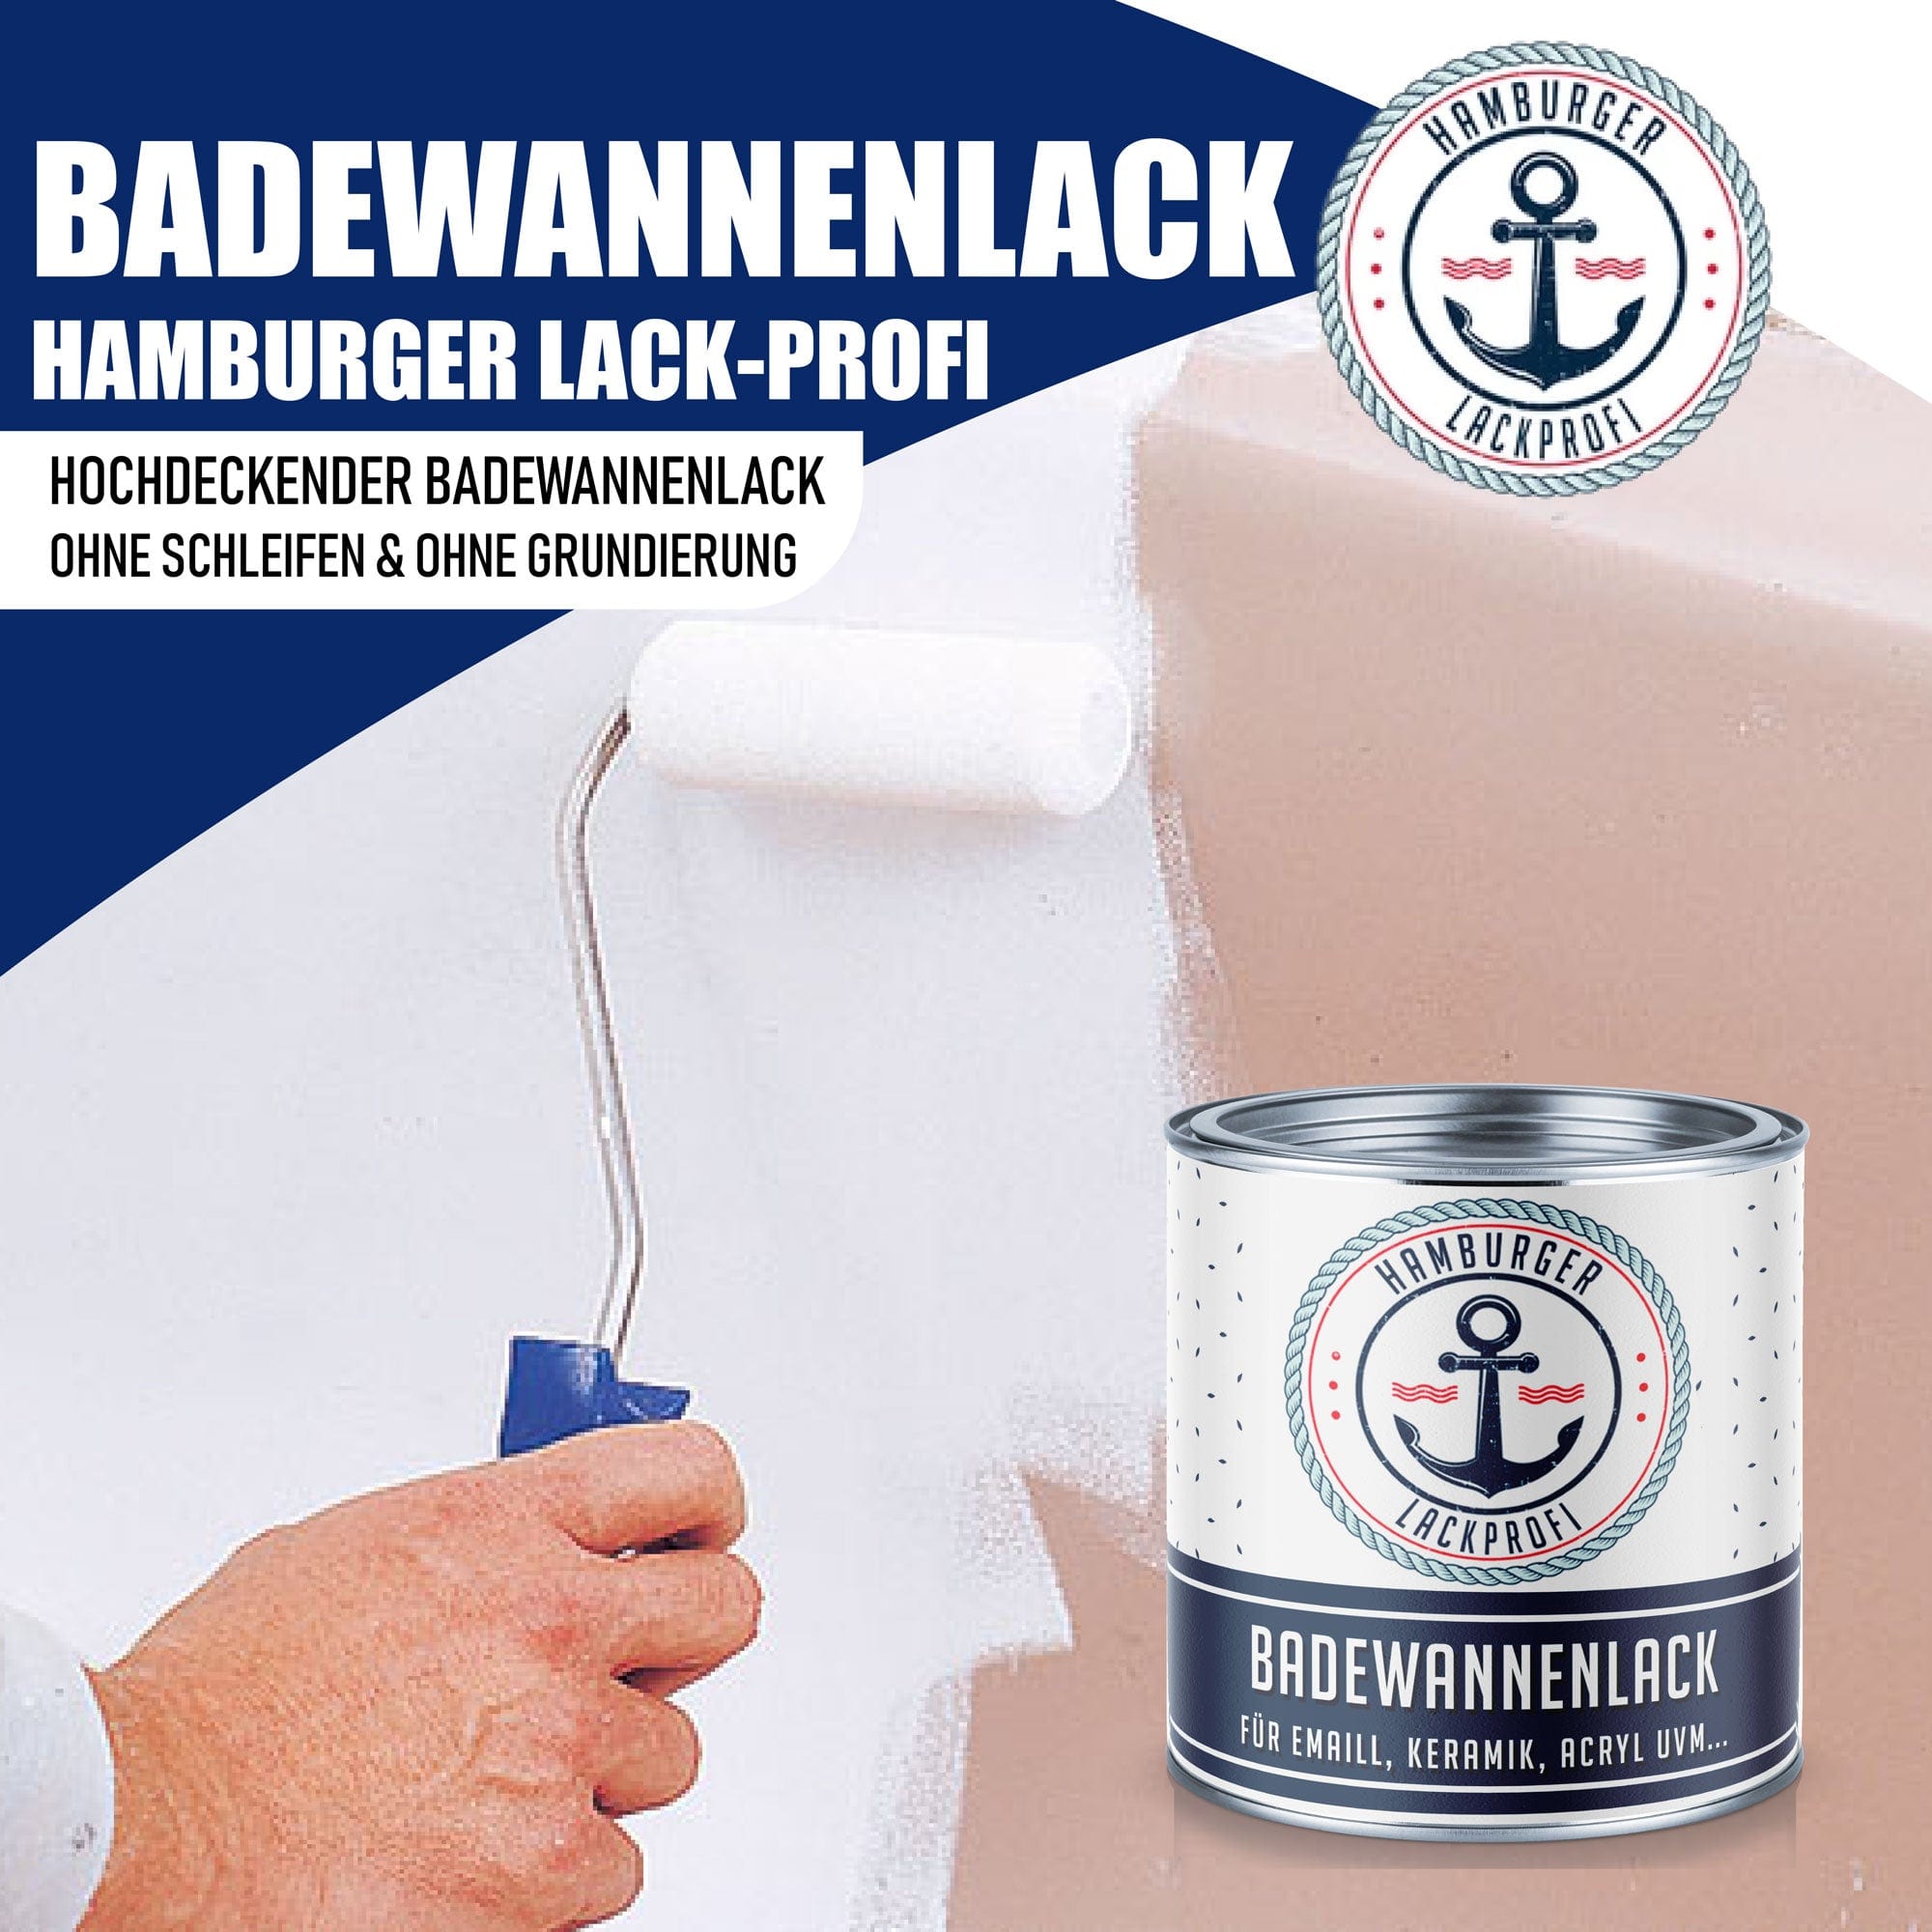 Hamburger Lack-Profi Badewannenlack Hamburger Lack-Profi 2K Badewannenlack Violettblau RAL 5000 - Glänzend / Seidenmatt / Matt